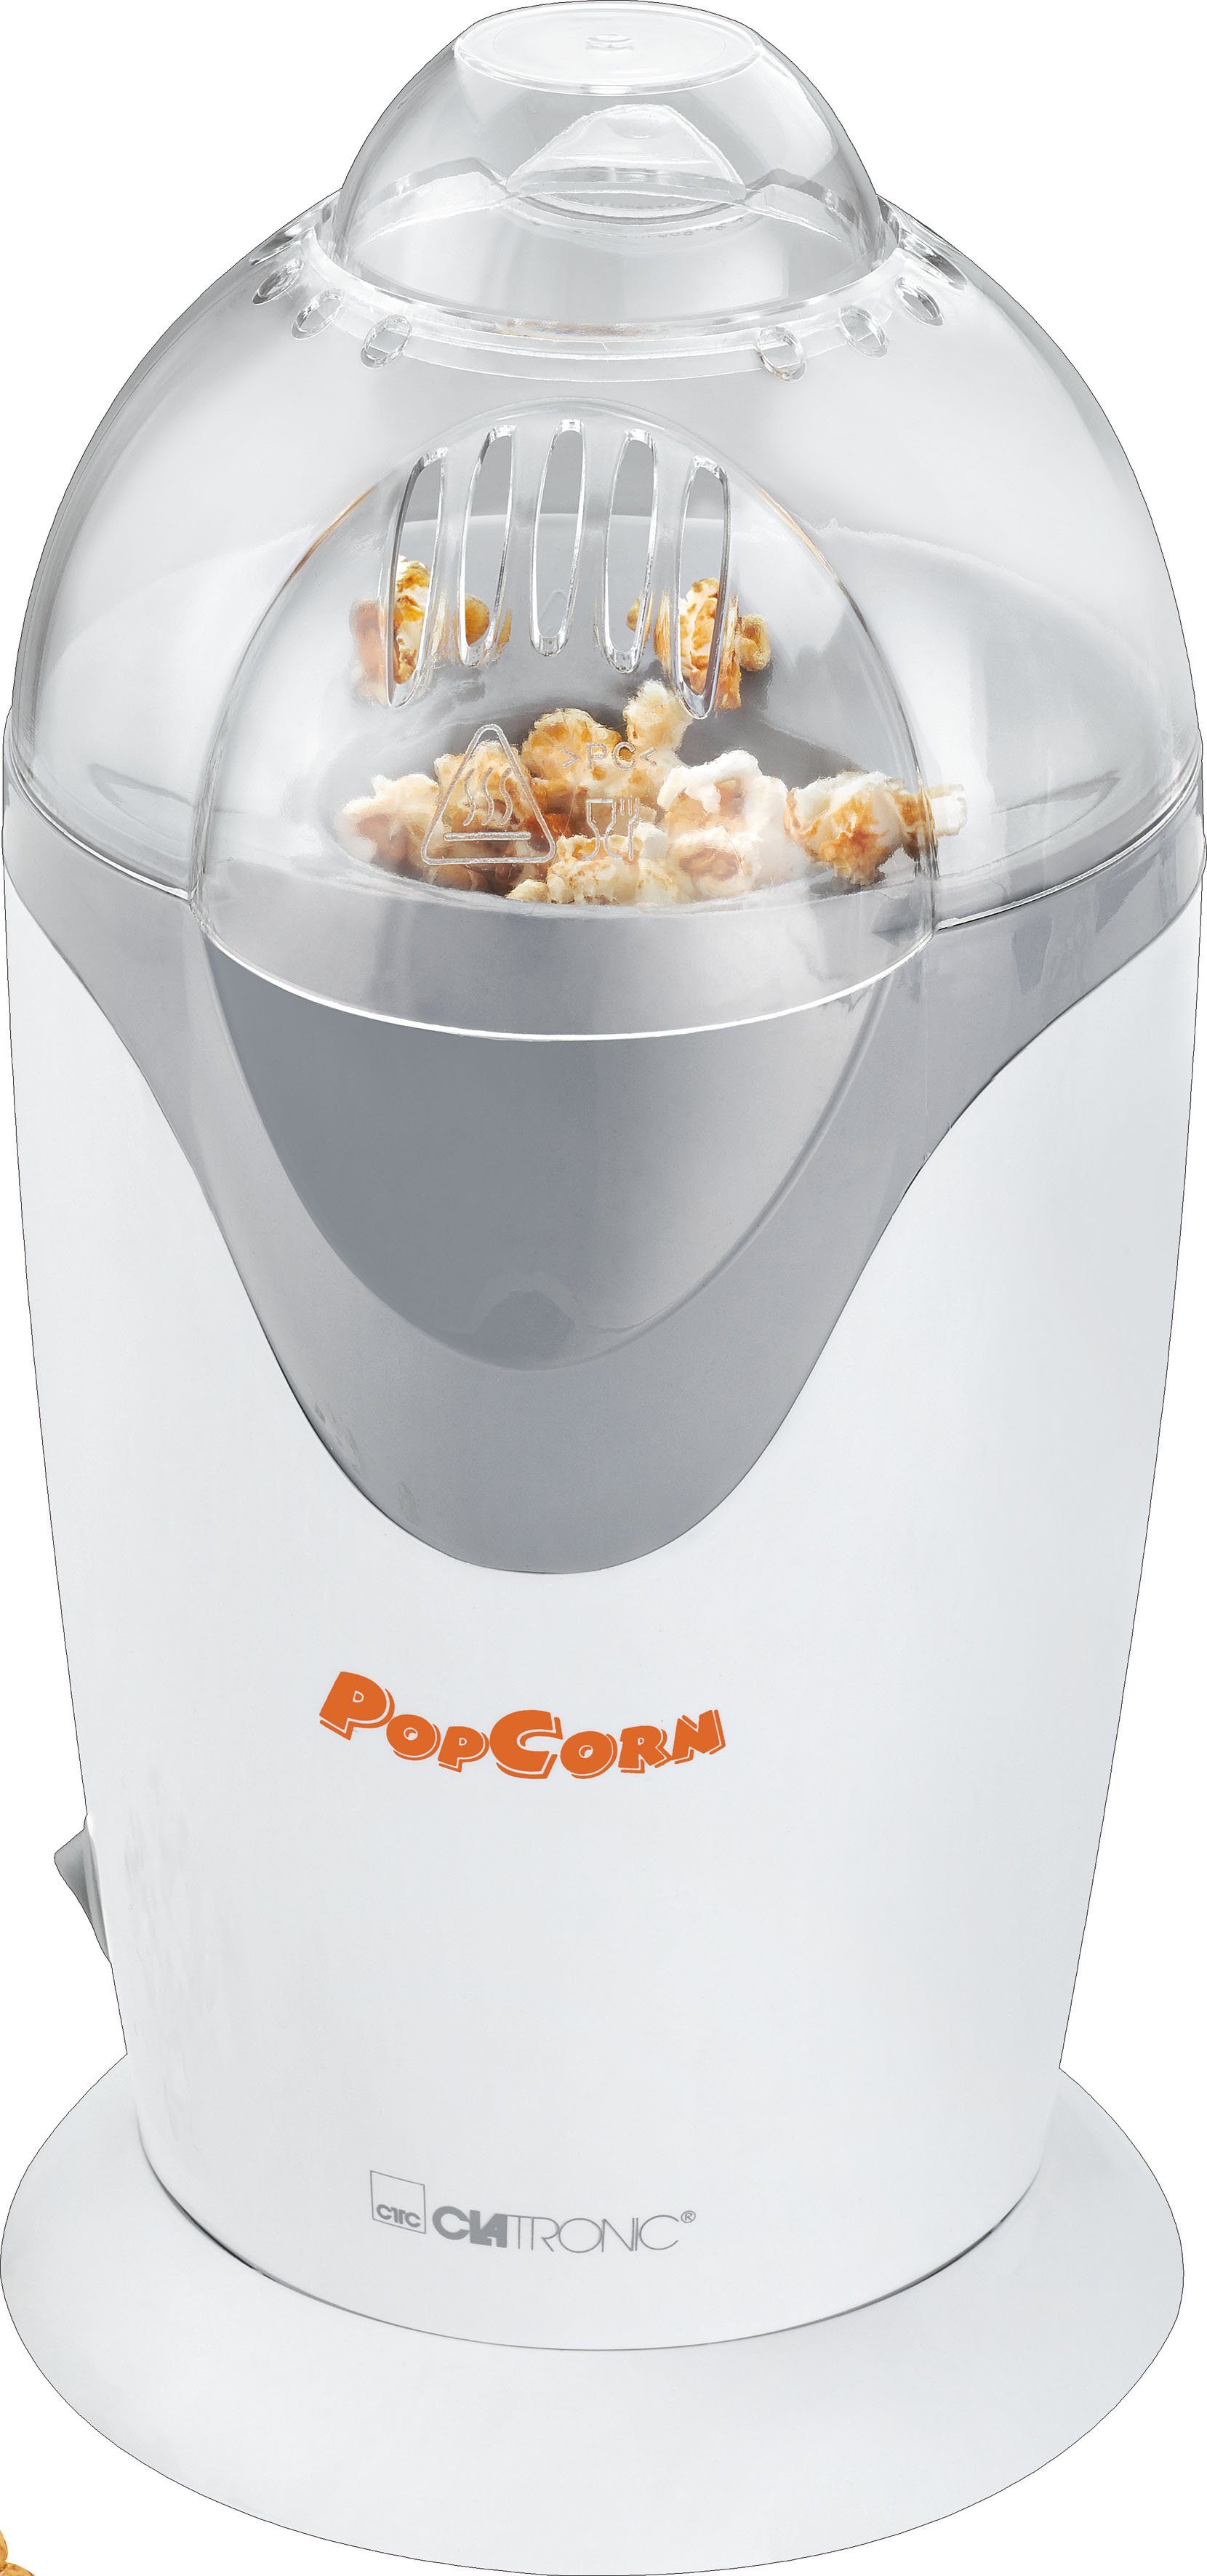 CLATRONIC Popcornmaschine 3635 PM